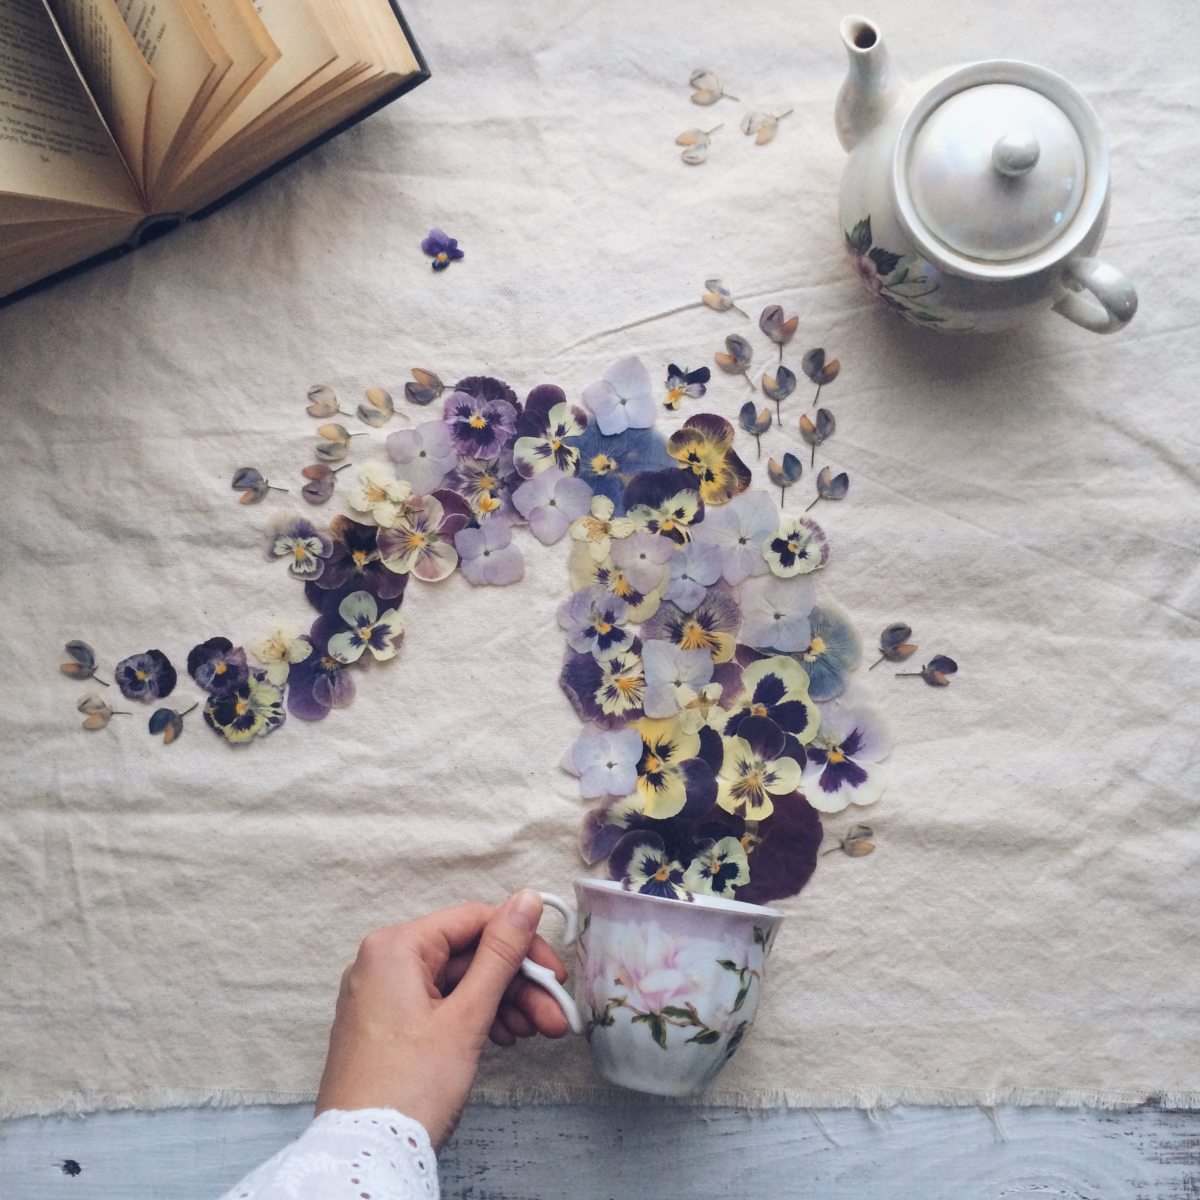 Enchanting Still Life Photographs Made Using Teacups Leaves And Flowers By Marina Malinovaya 1